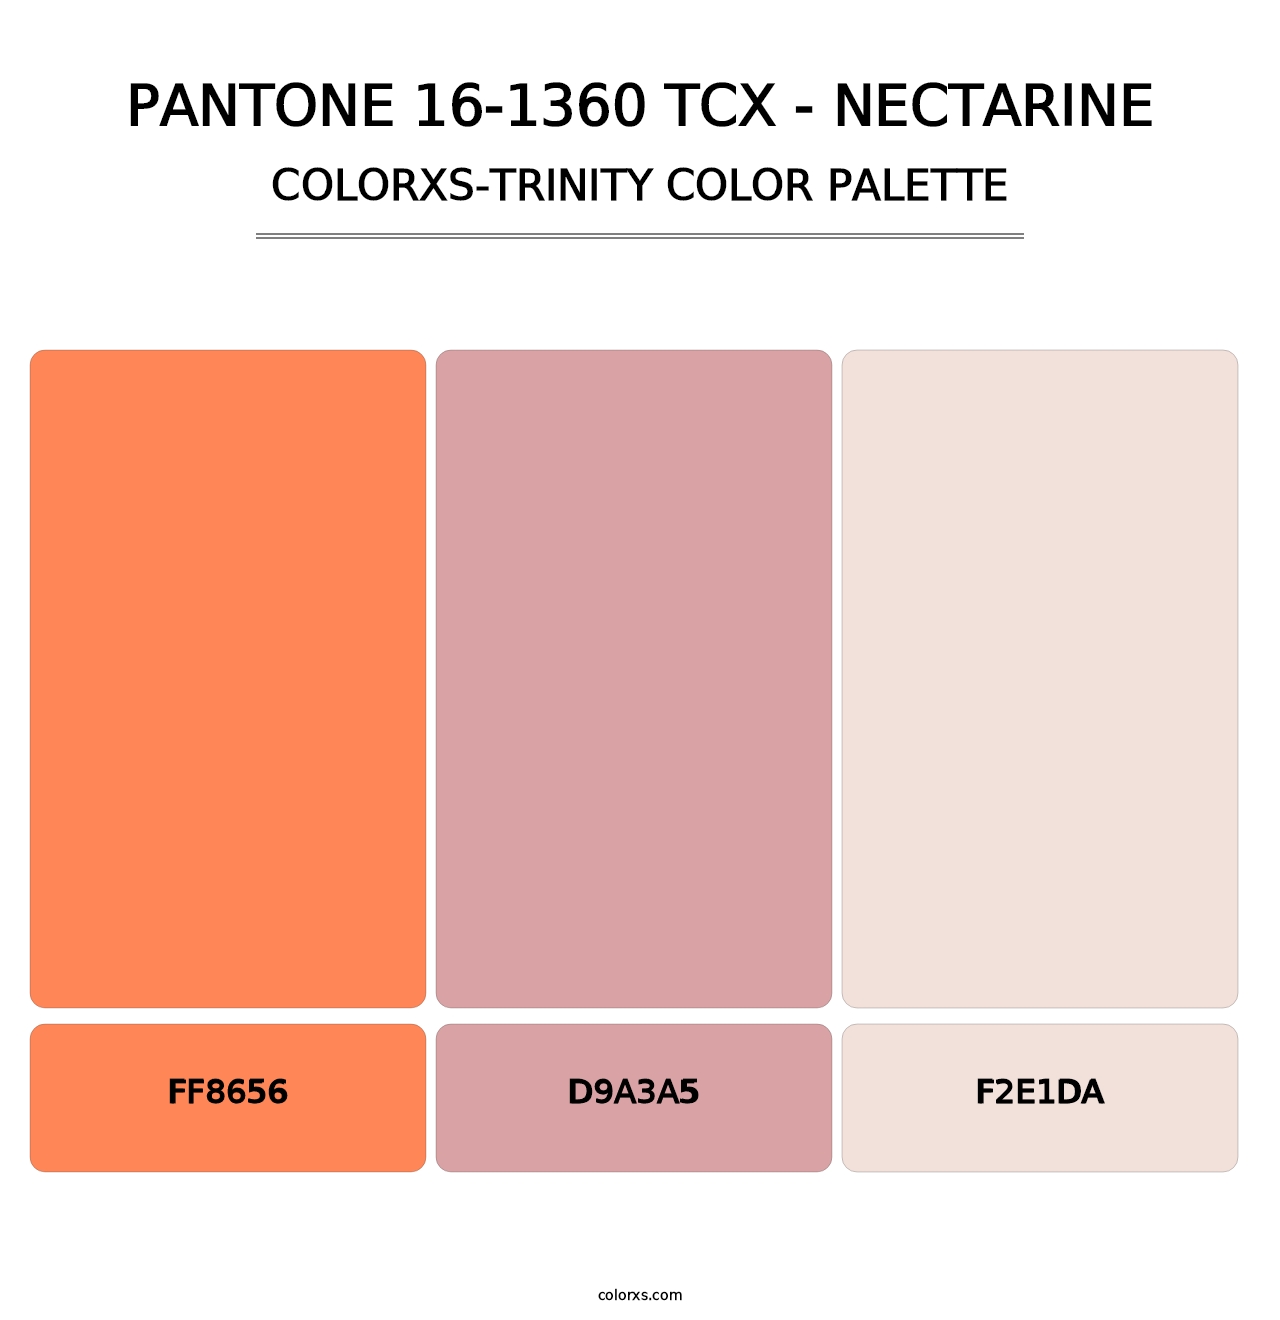 PANTONE 16-1360 TCX - Nectarine - Colorxs Trinity Palette